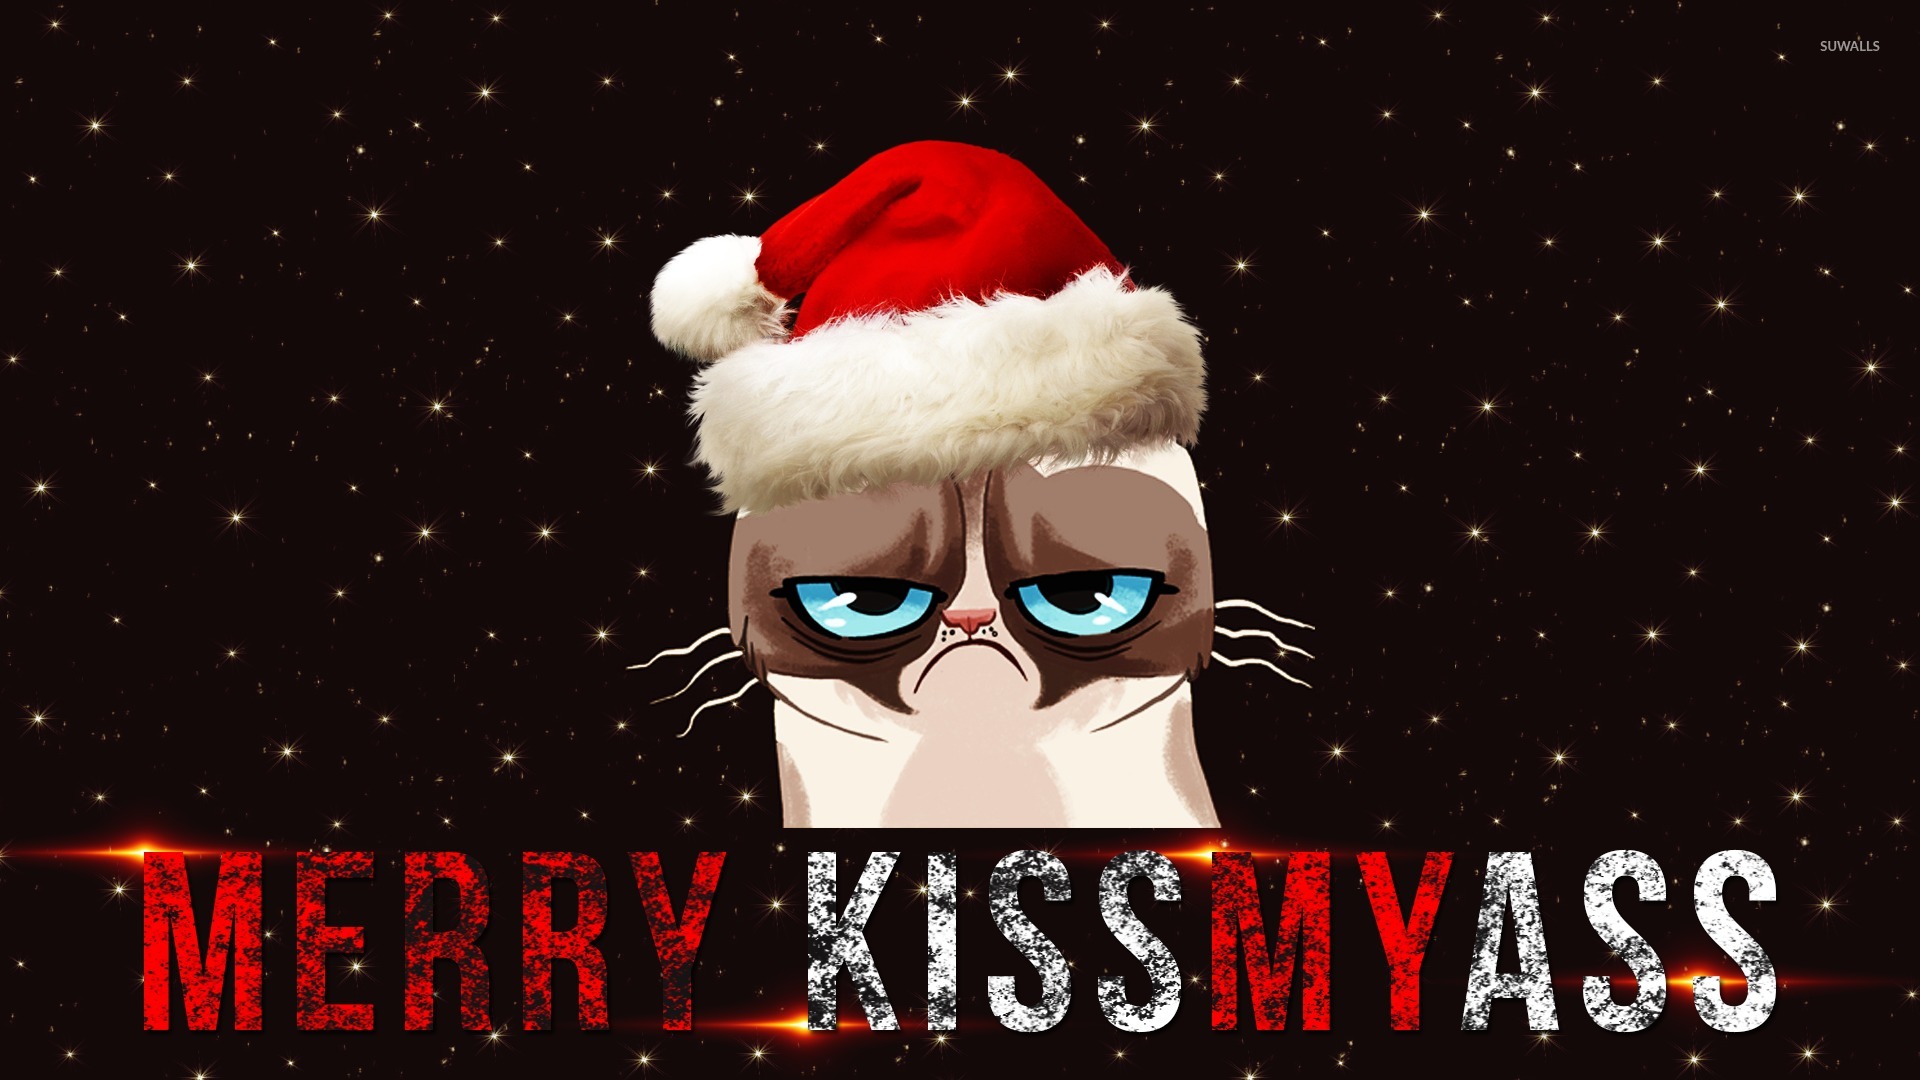 [46+] Grumpy Cat Christmas Wallpaper on WallpaperSafari